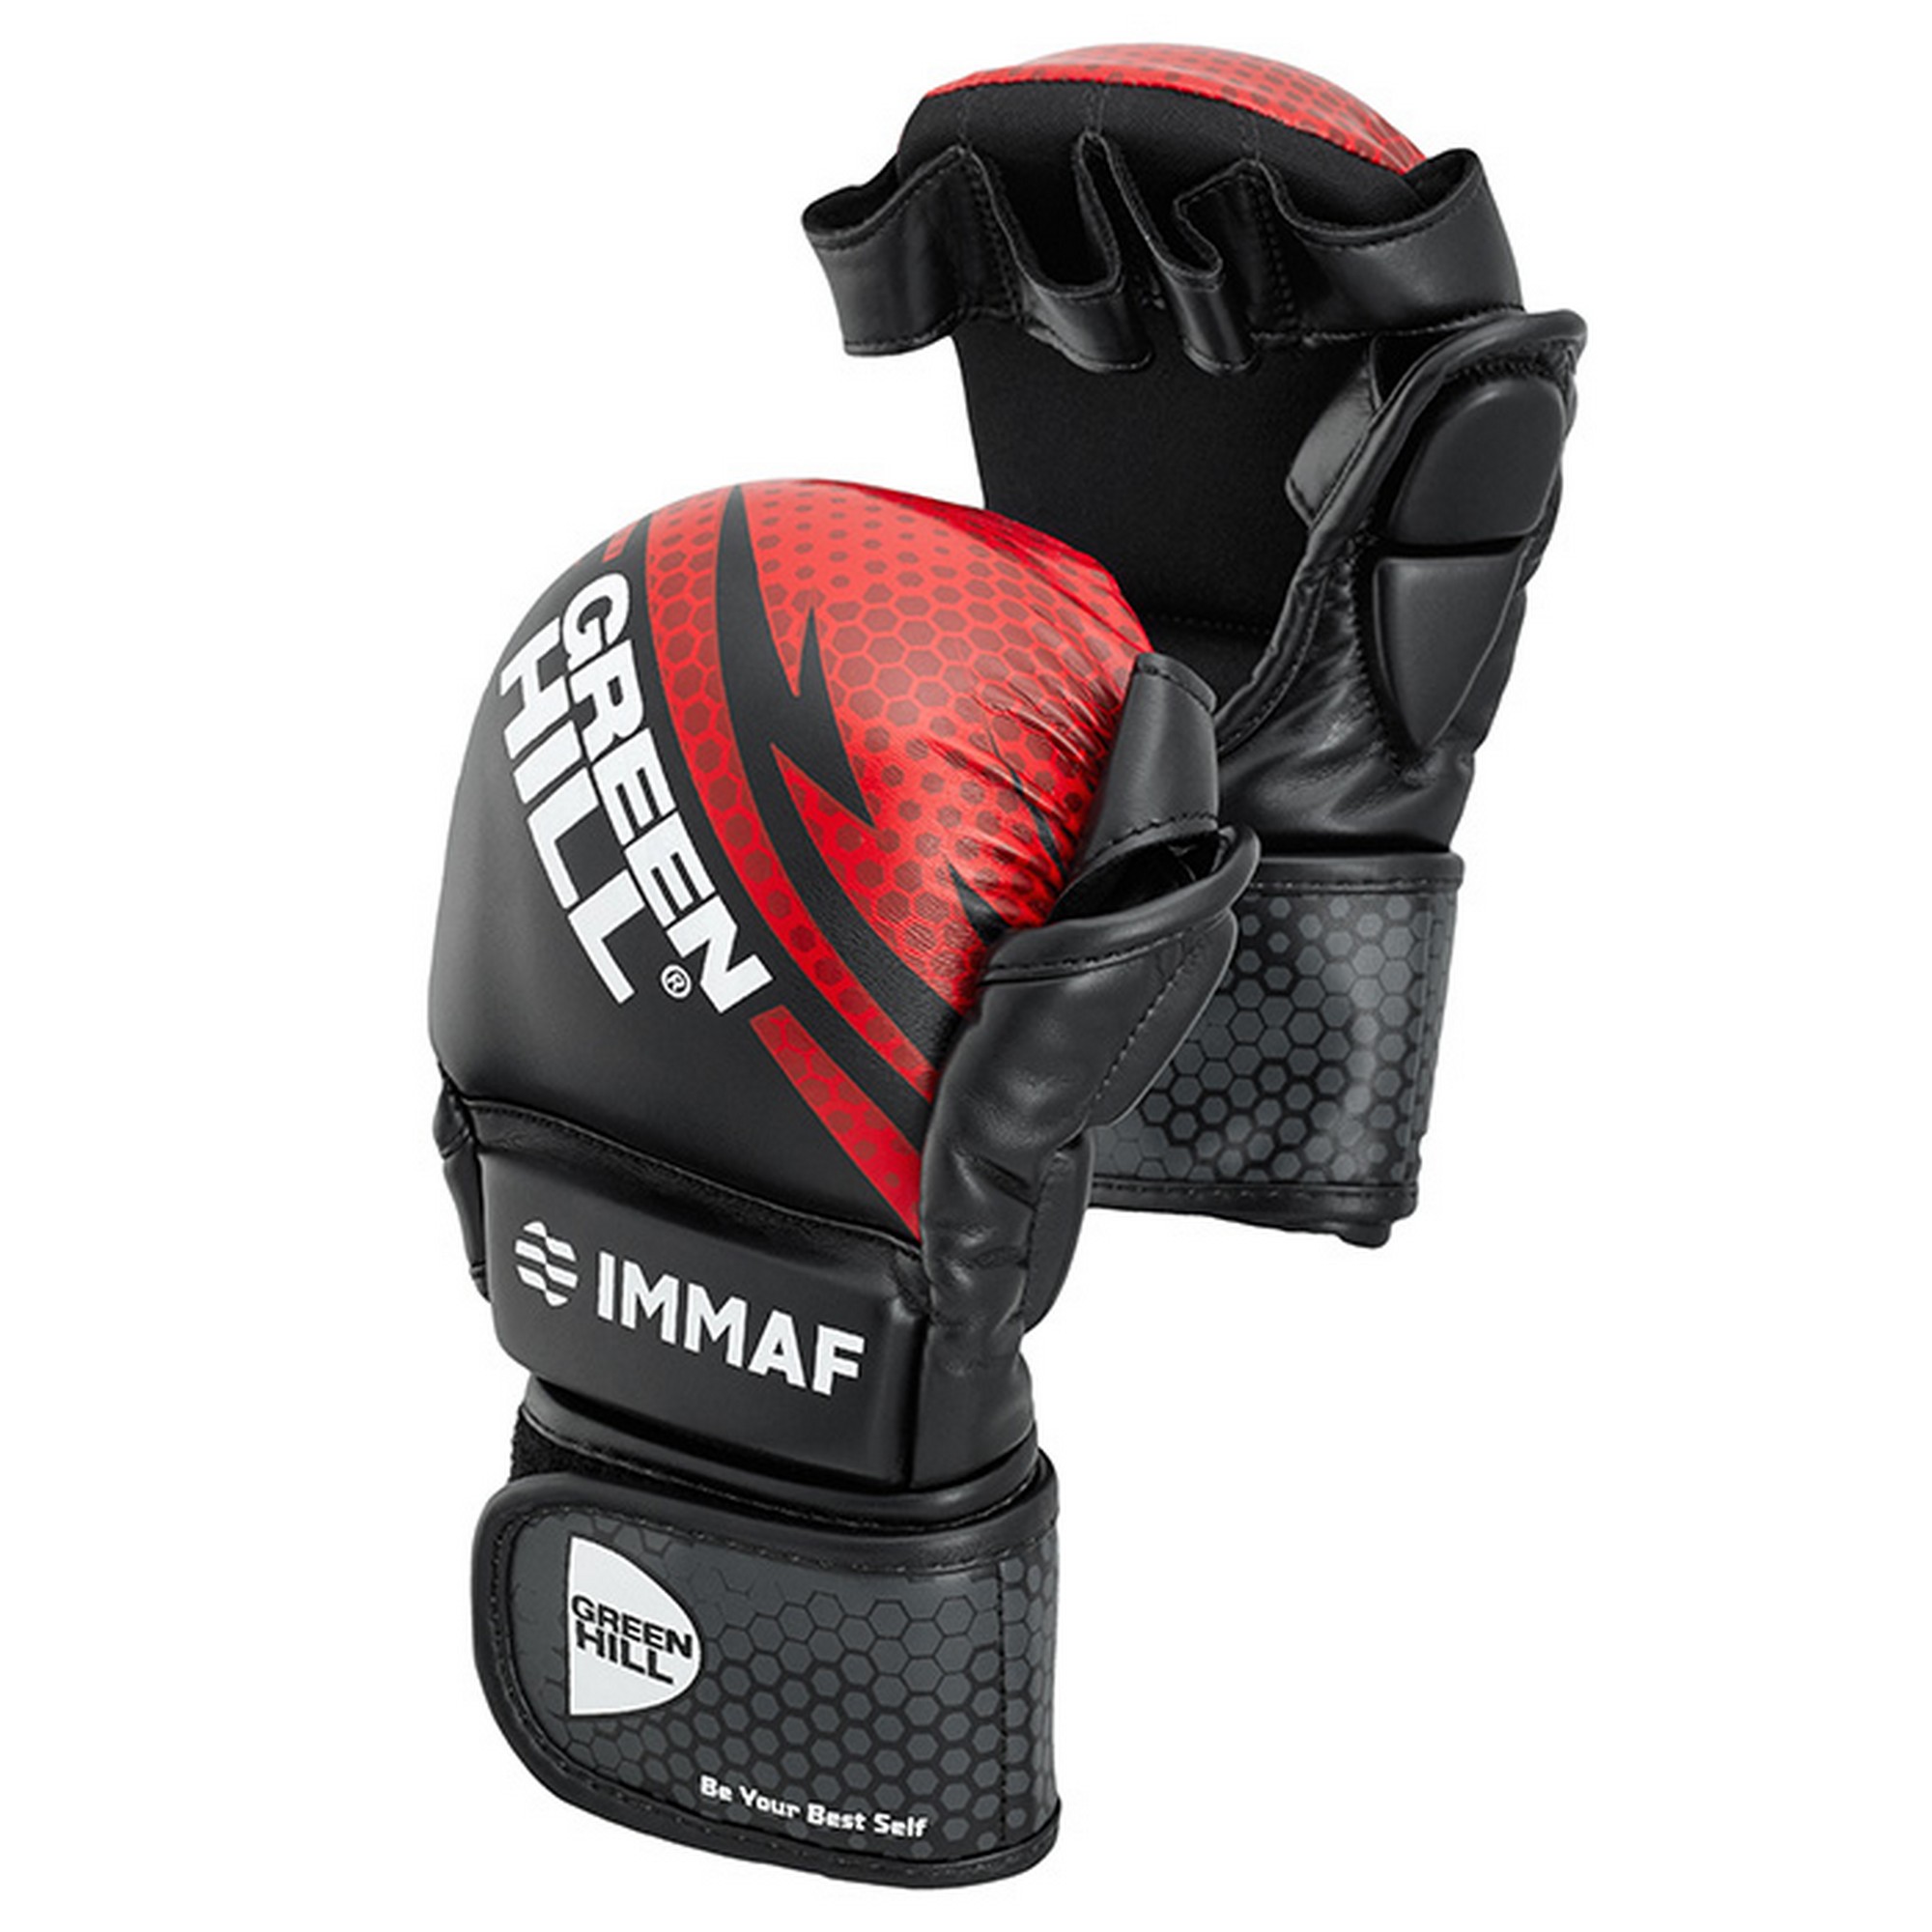 Купить Перчатки MMA Green Hill MMAF approved MMI-602 черно-красный,